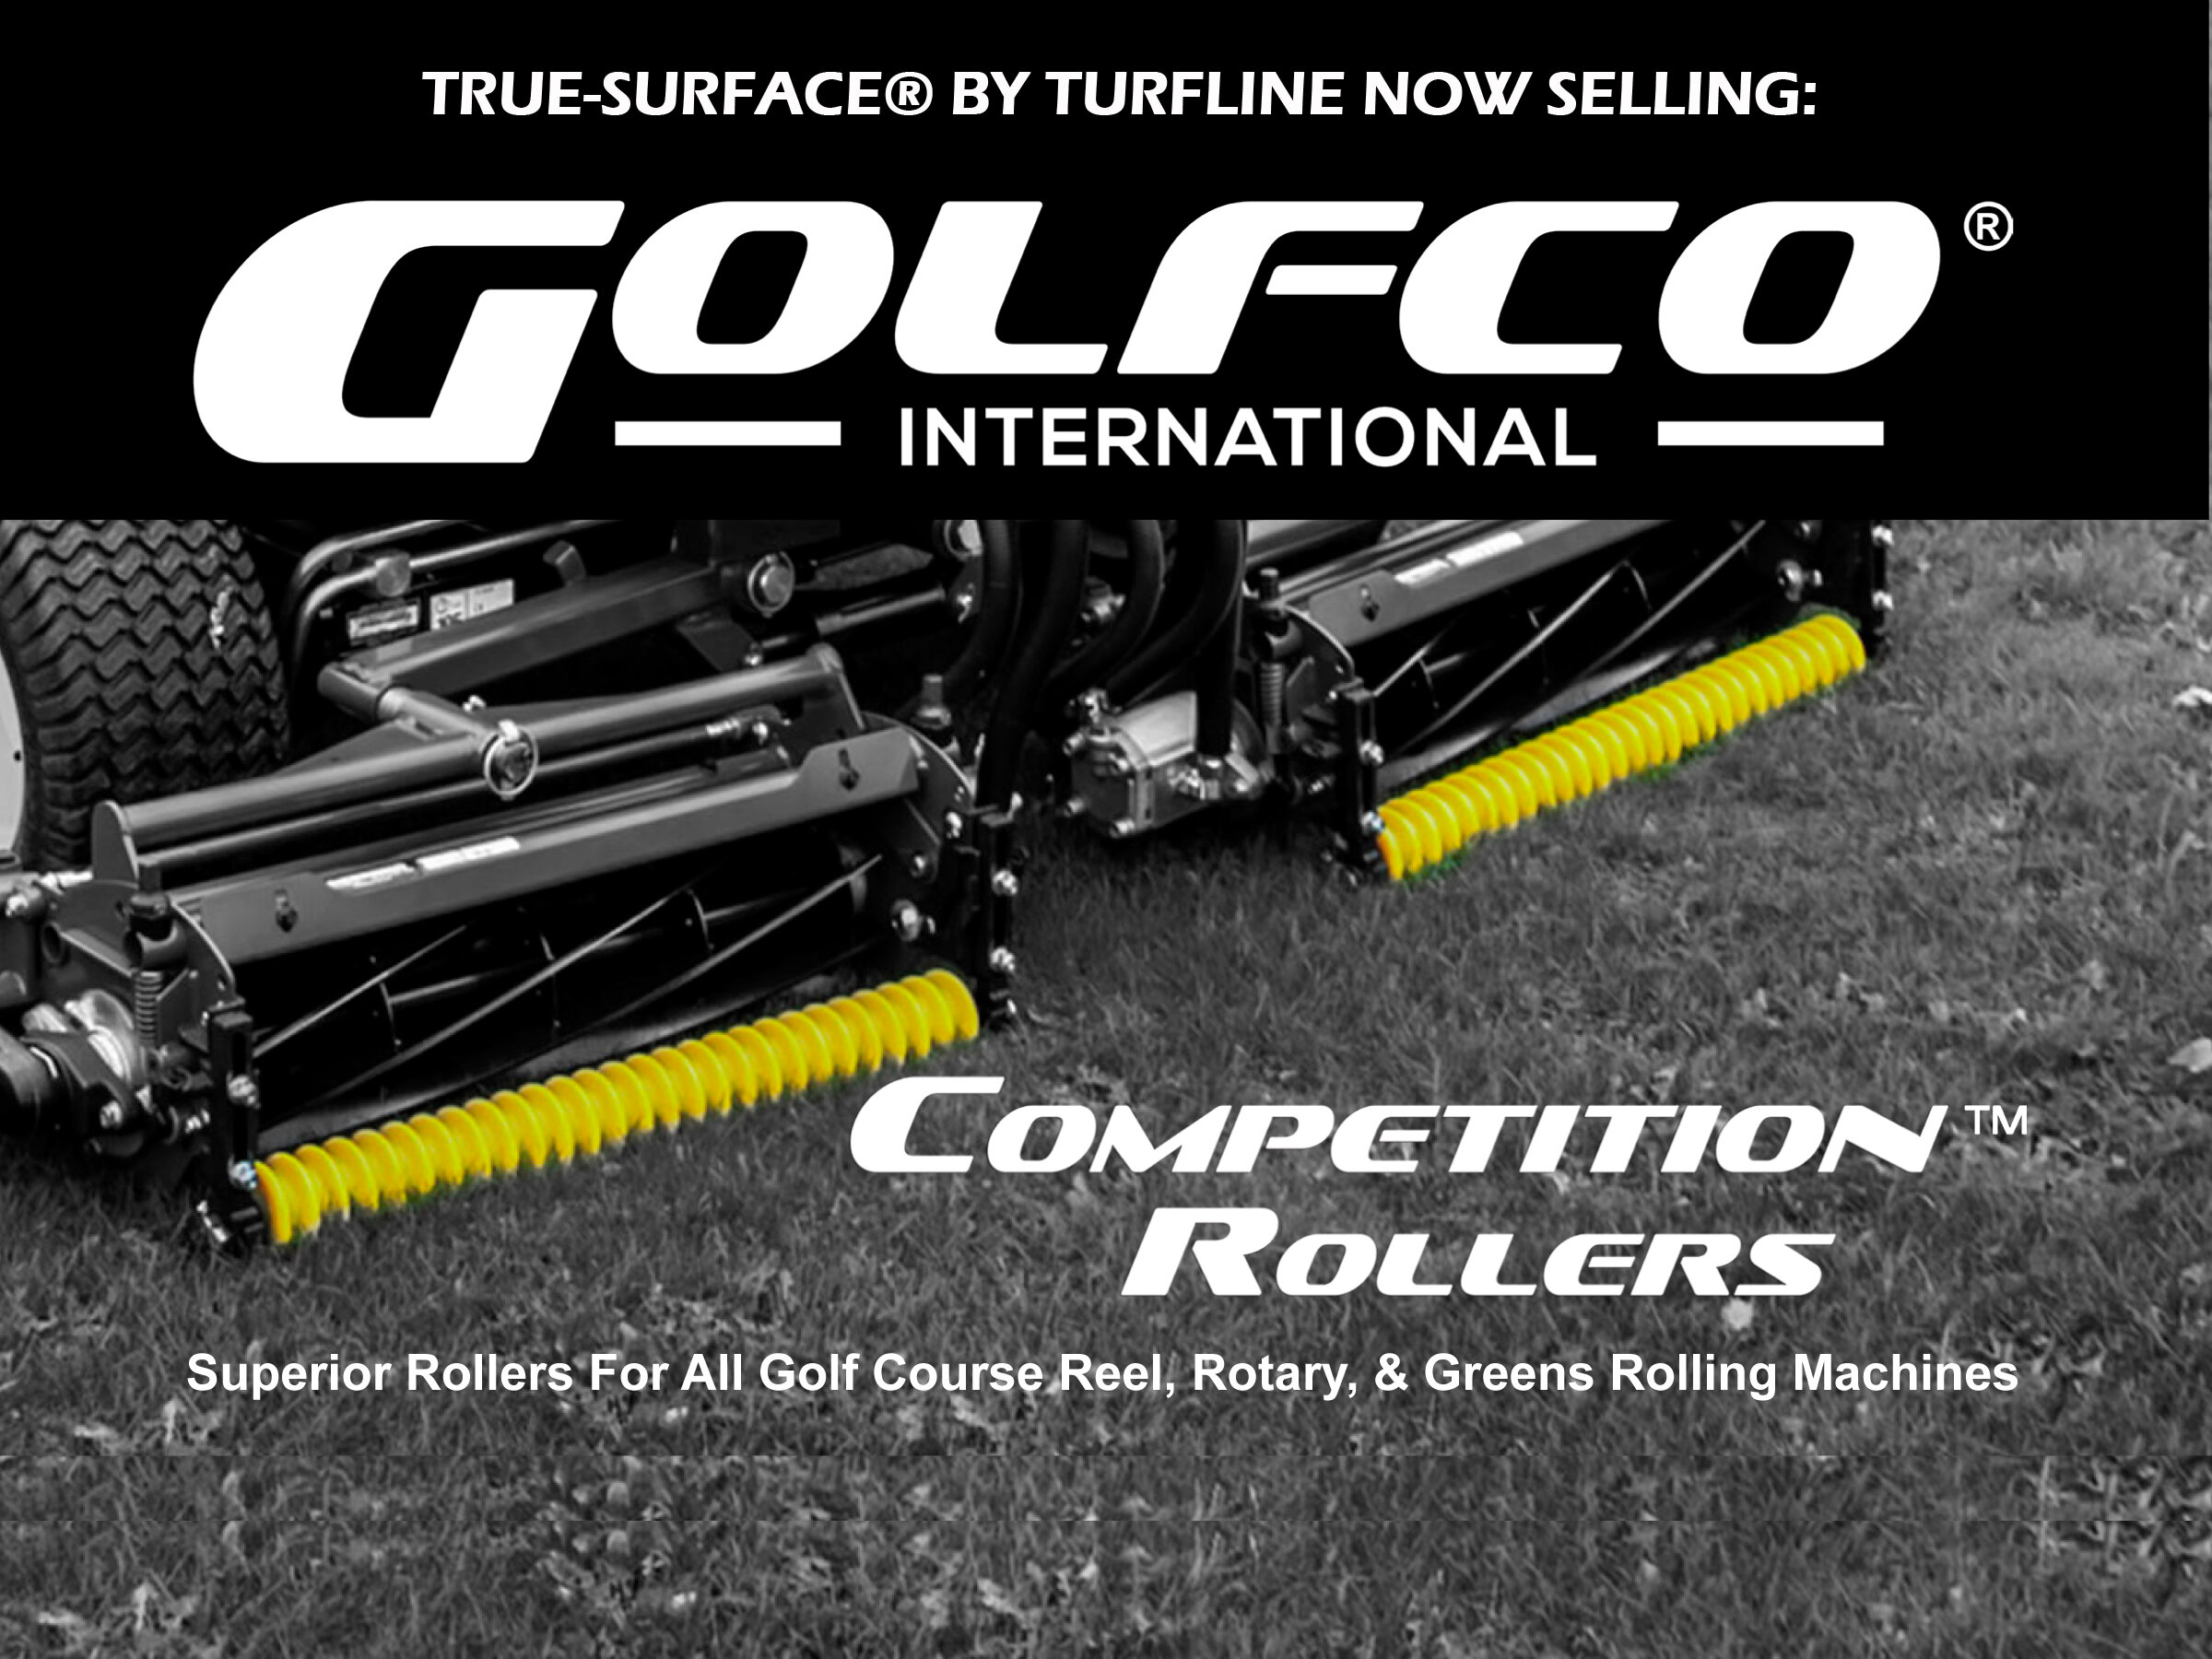 Verslaafde kool puzzel Golfco Rollers — True-Surface® by Turfline, Inc.